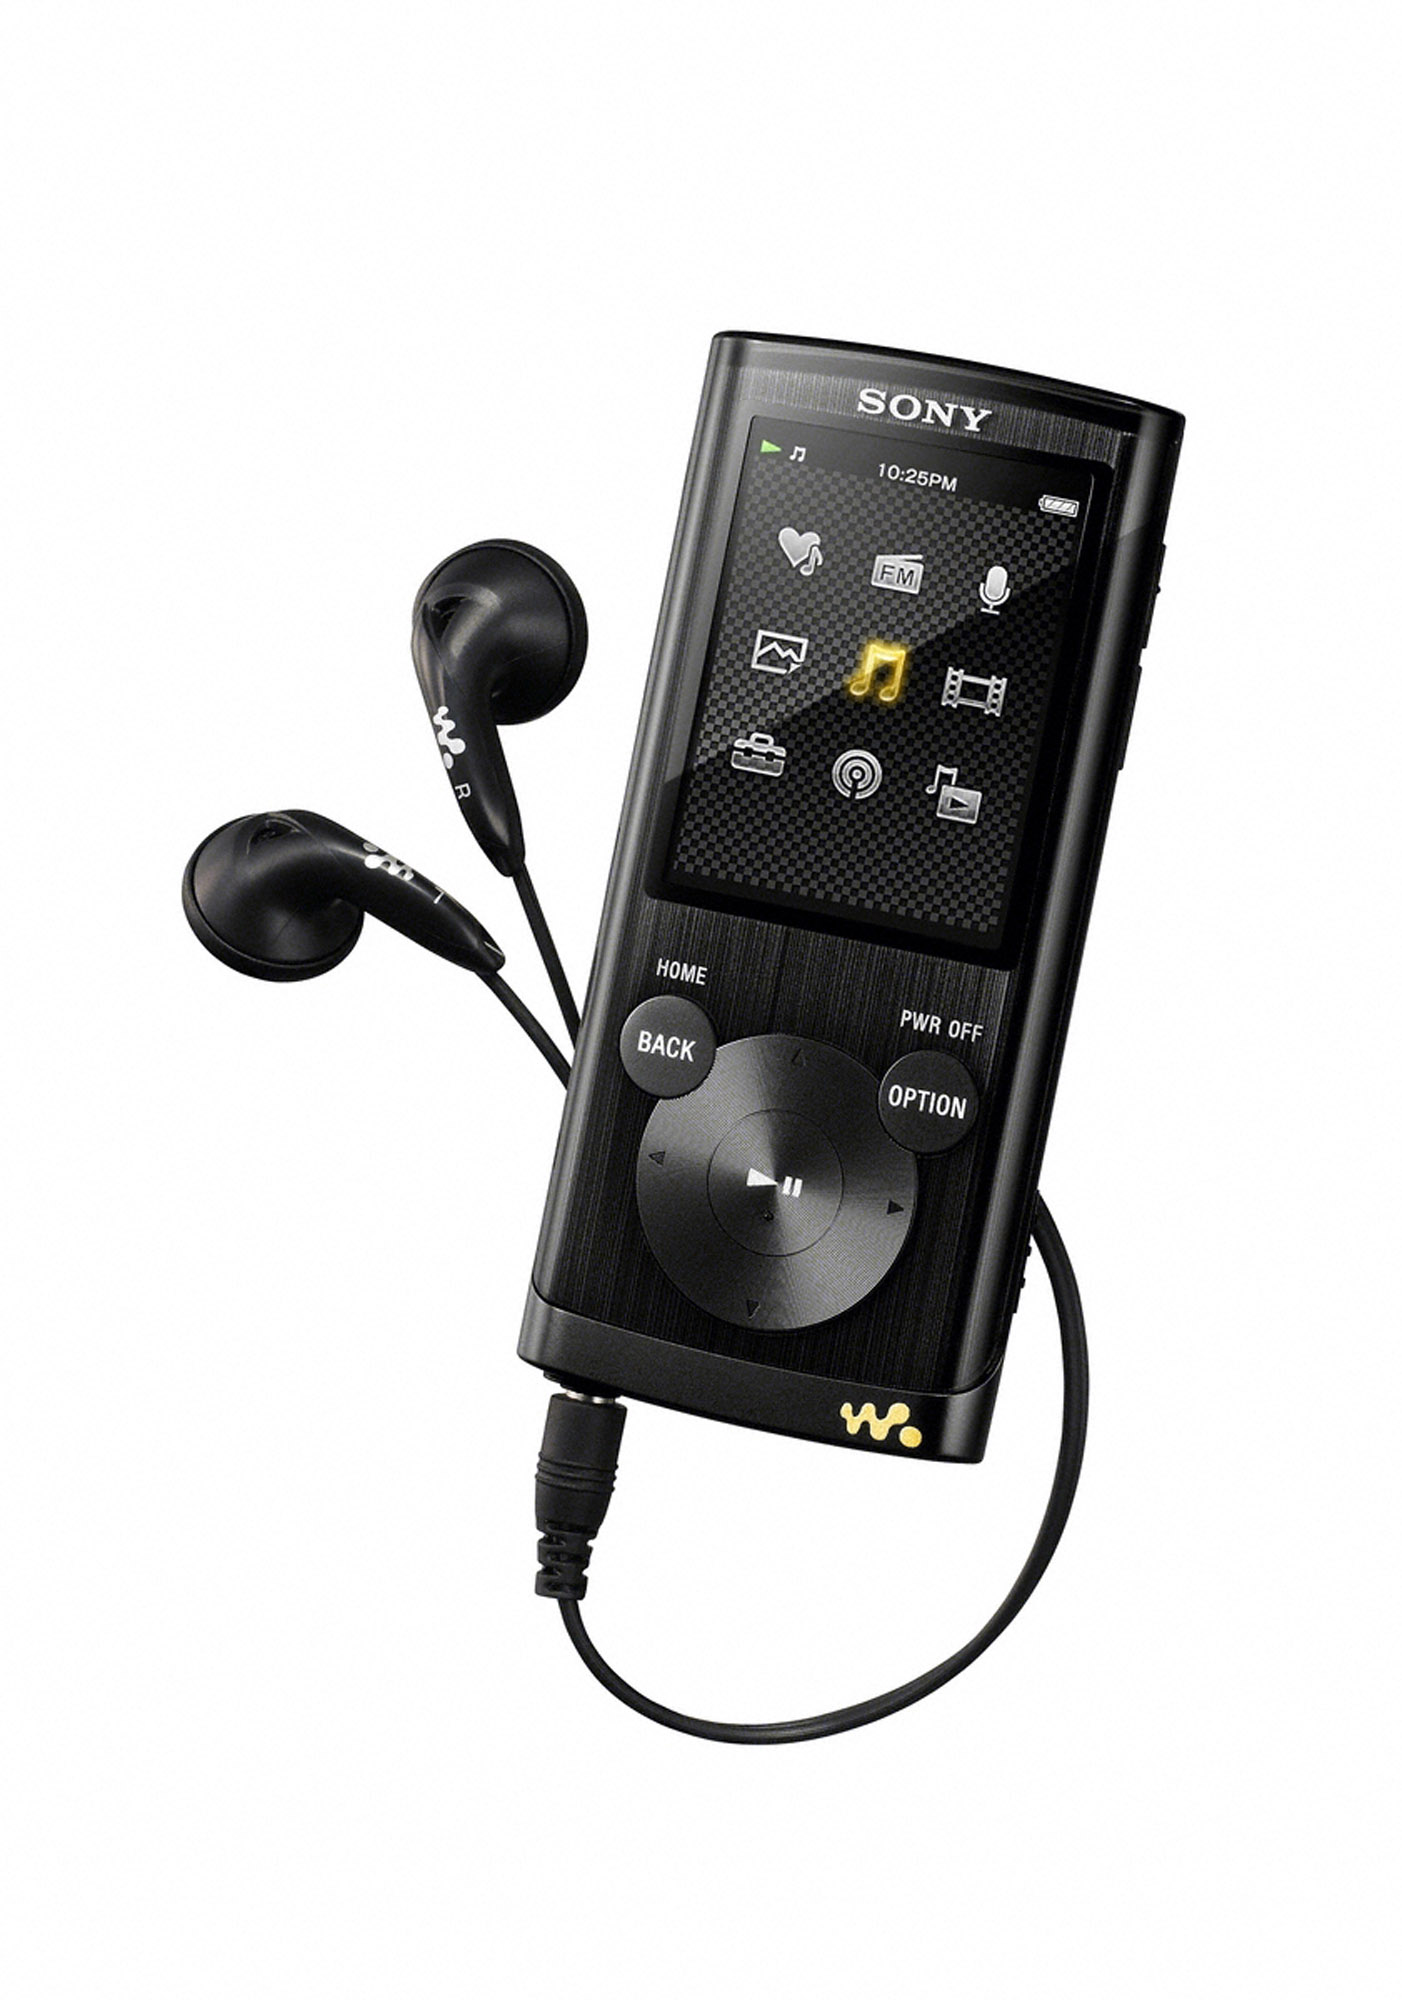 Videos   Players on Hitech Review    Photos    Sony Walkman E450 Video Mp3 Player